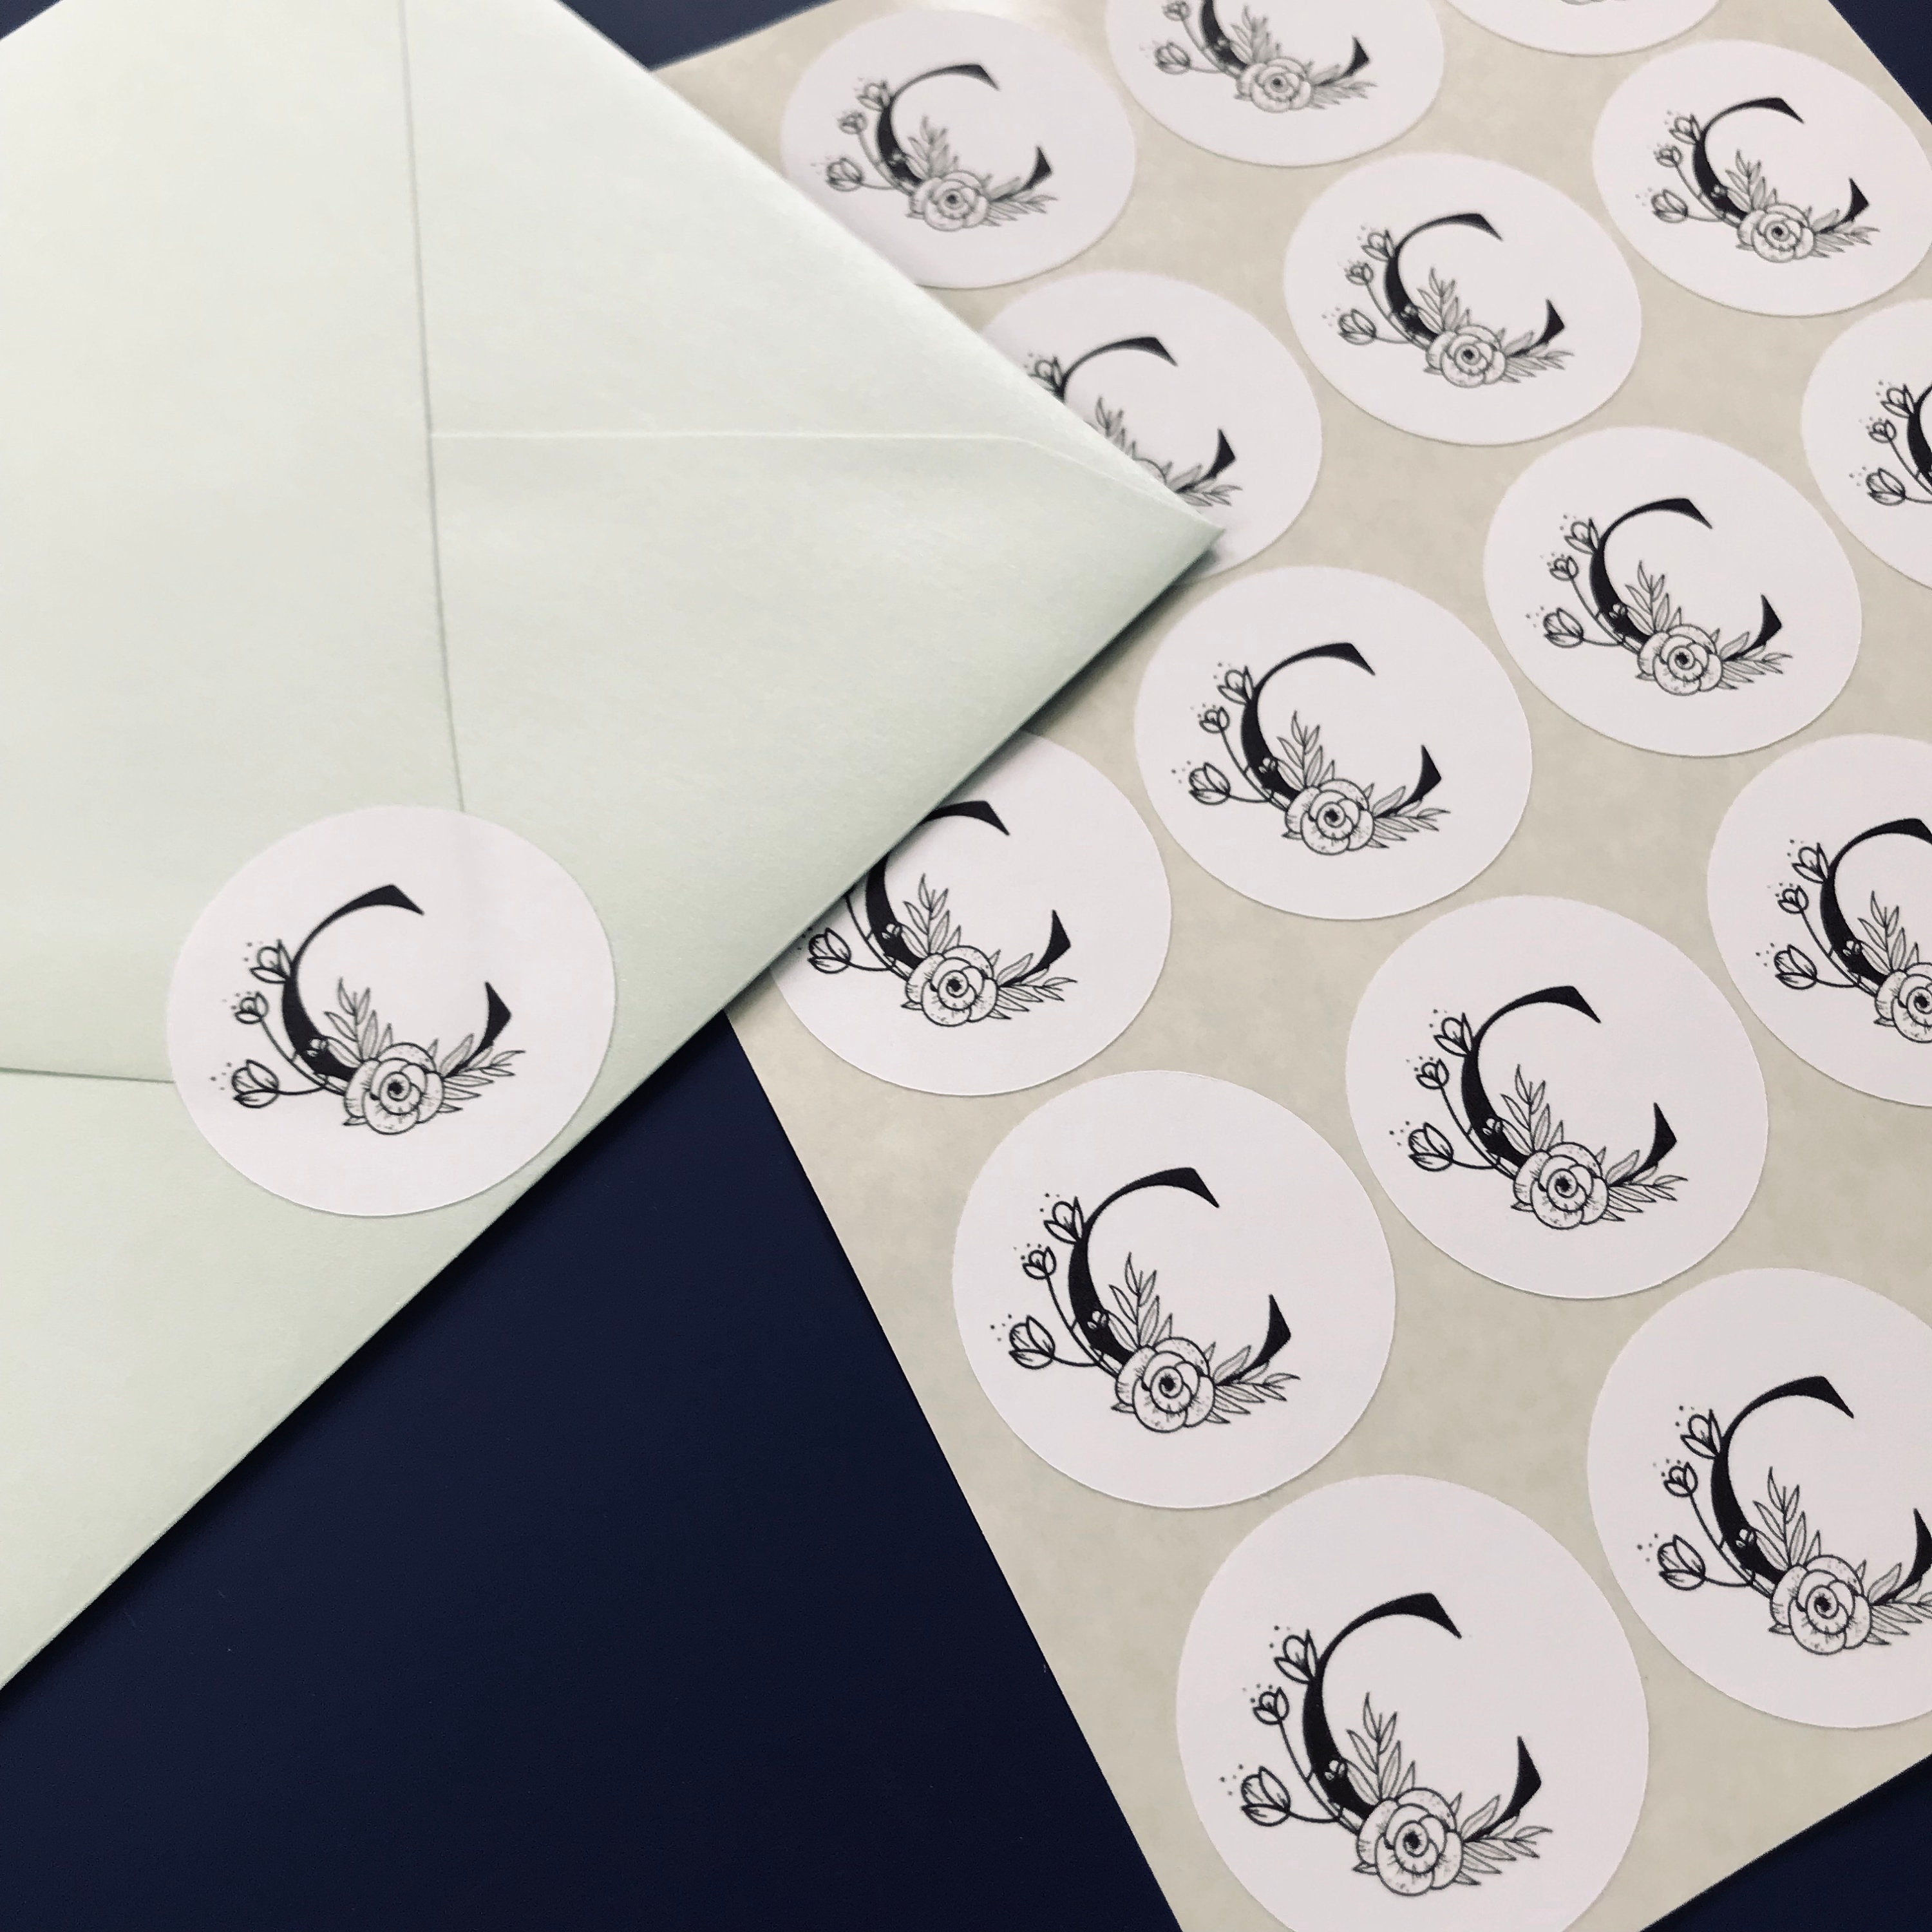 1 Monogram Envelope Seal Stickers Set of 63, Round Initial Sticker